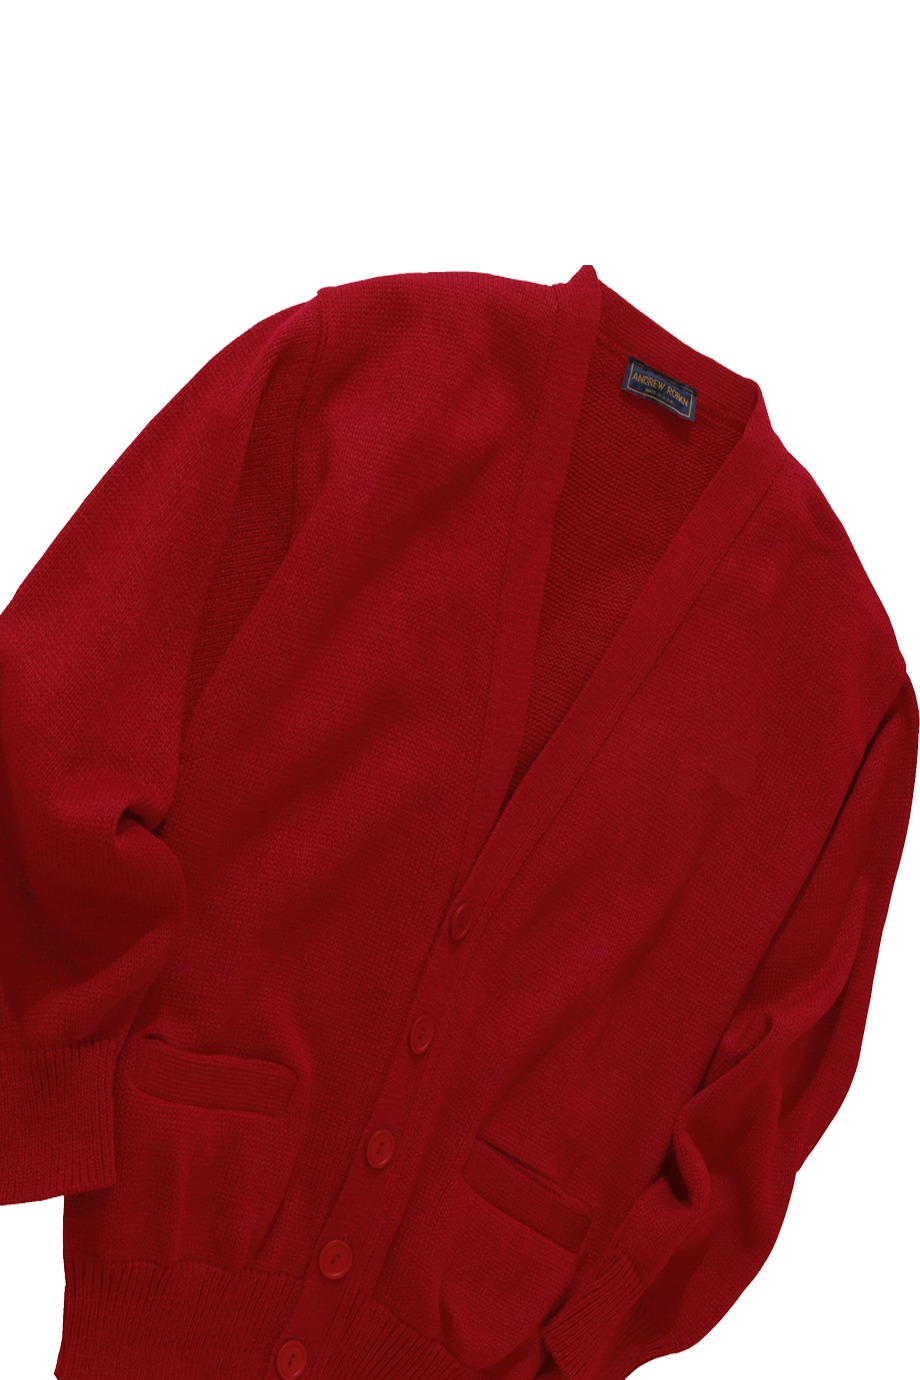 Edwards Garment 350 - V-Neck Pocket Cardigan